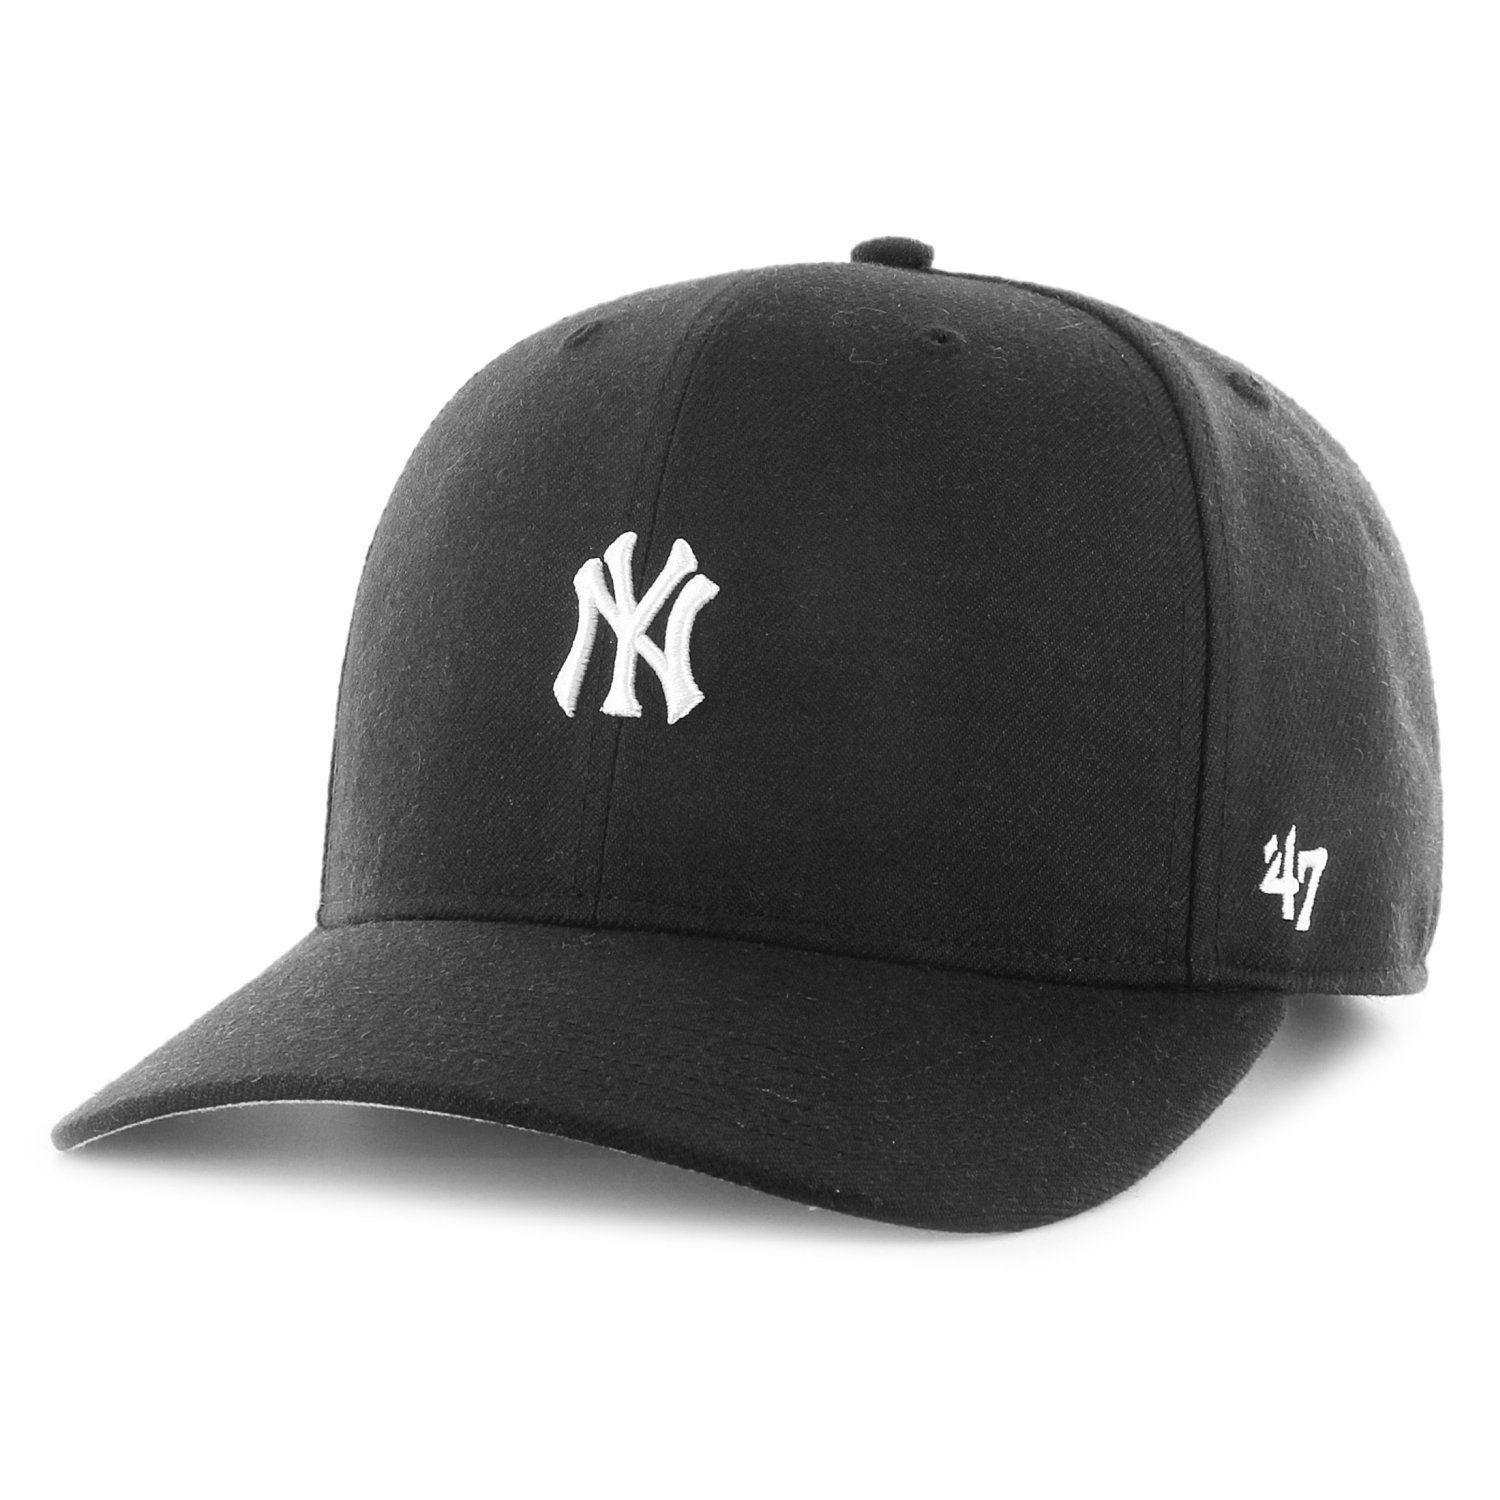 x27;47 Brand New Cap RUNNER BASE Profile Low Snapback Yankees York